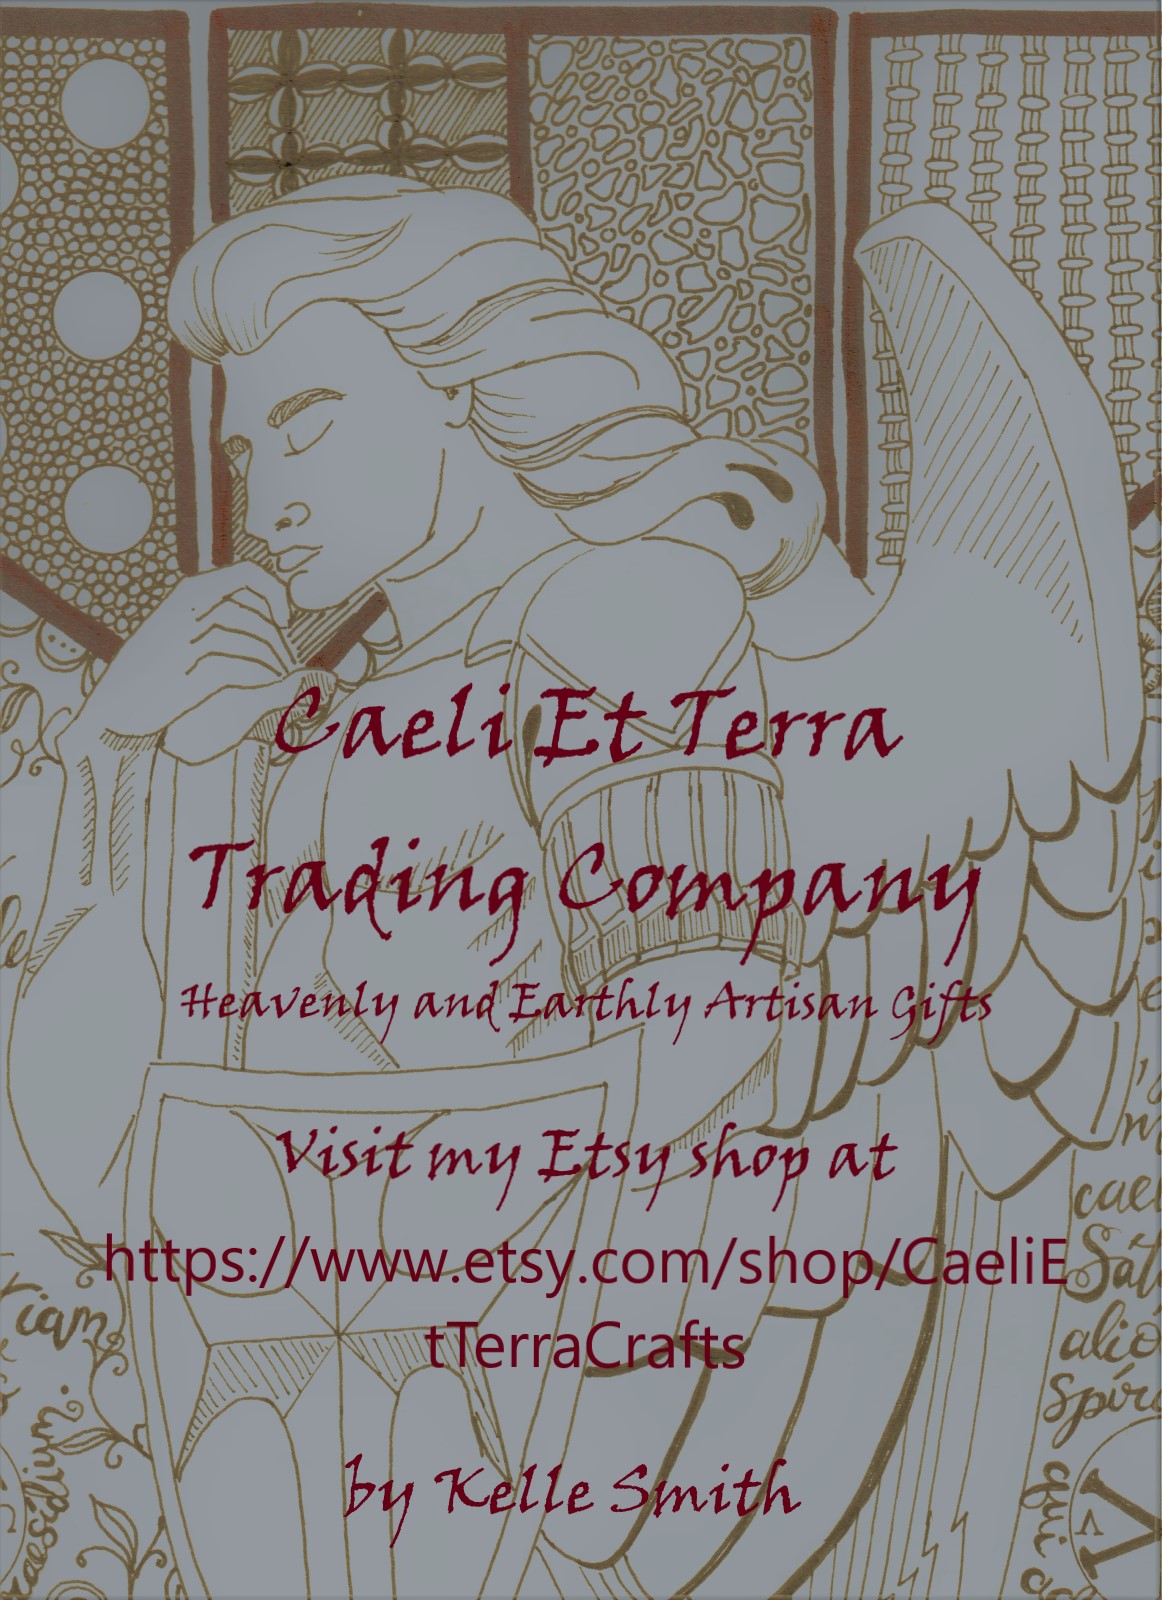 Visit my Etsy Shop!